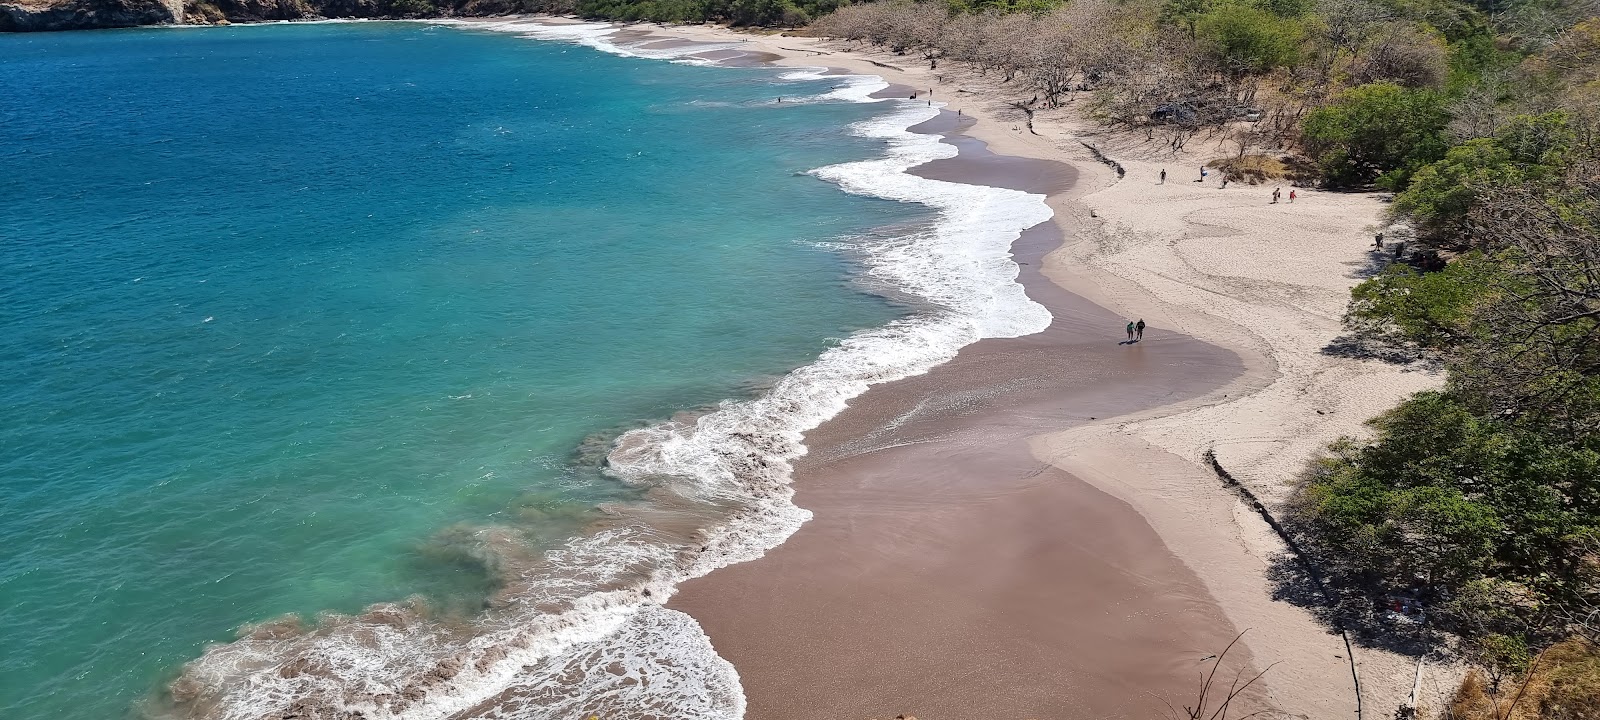 Foto di Playa Nombre De Jesus con una superficie del sabbia fine e luminosa